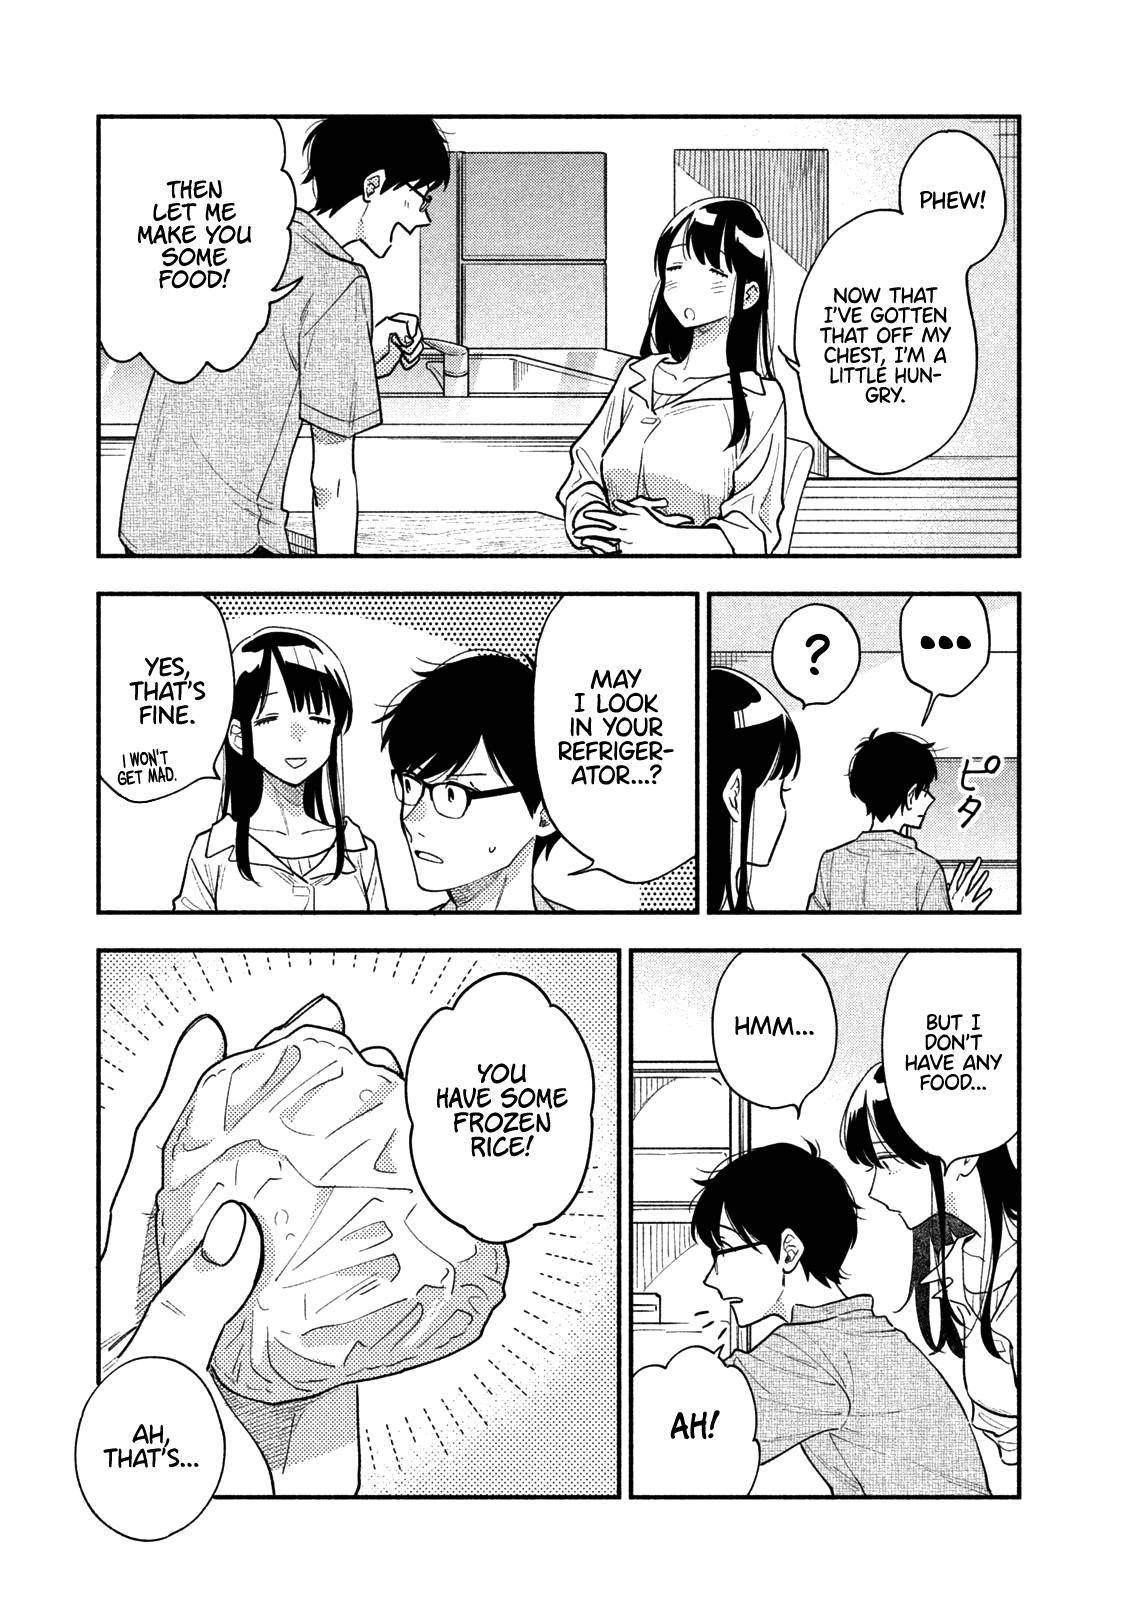 Sugoi Manga - Domestic Girlfriend #275 spoiler . . . . .